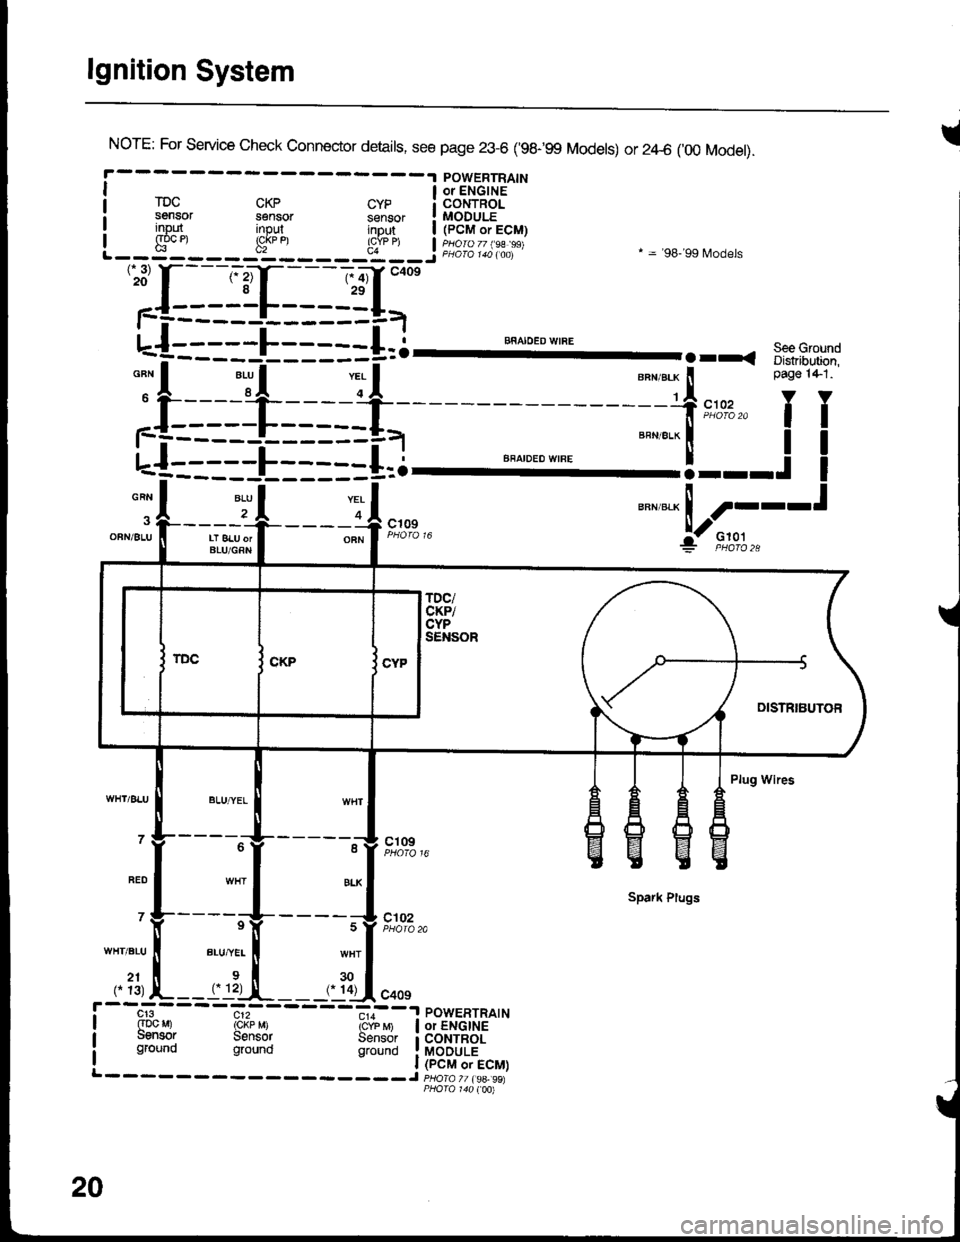 HONDA INTEGRA 1998 4.G Workshop Manual lgnition System
INorE: For service check connector details, see page 23-6 (98-99 Models) or 2zl-6 (00 Model).
POWERTRAINI a oielcirs -"
rDc cKp cyp i coNTRoLsensor sensor sensor ! MODULEinout inout